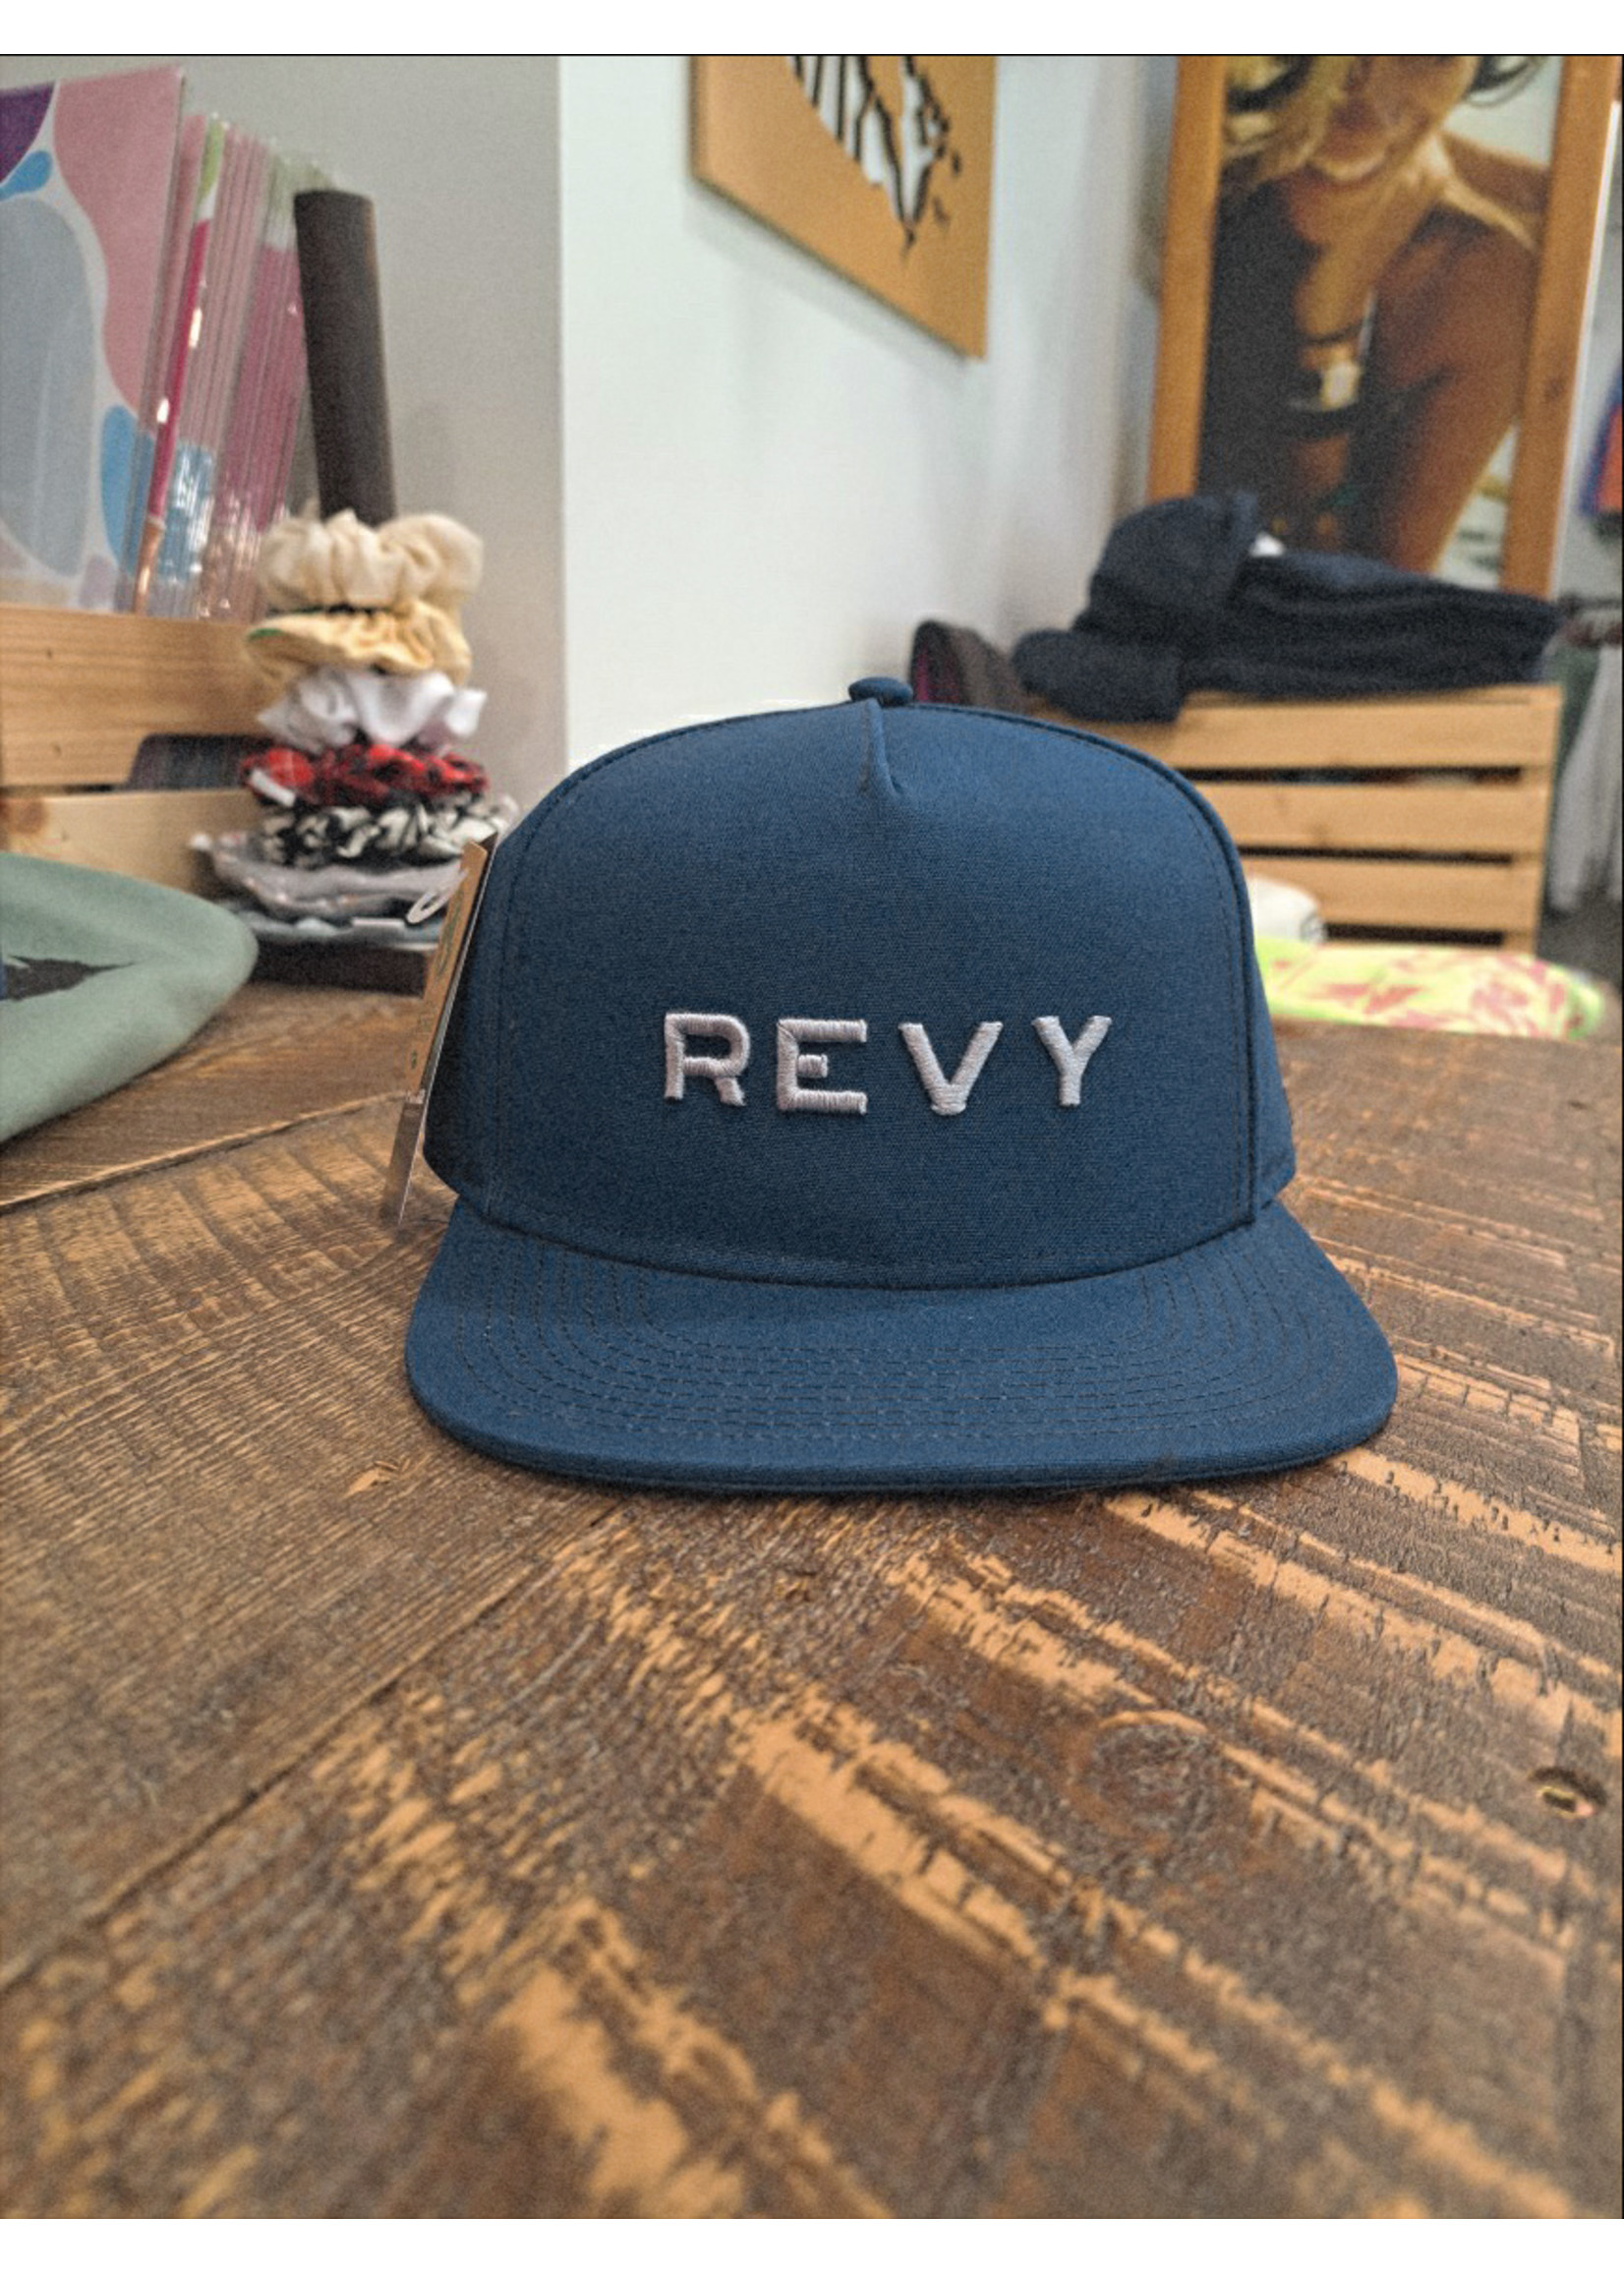 Trading Co. Revelstoke - Revy Eco Cap - Royal Blue